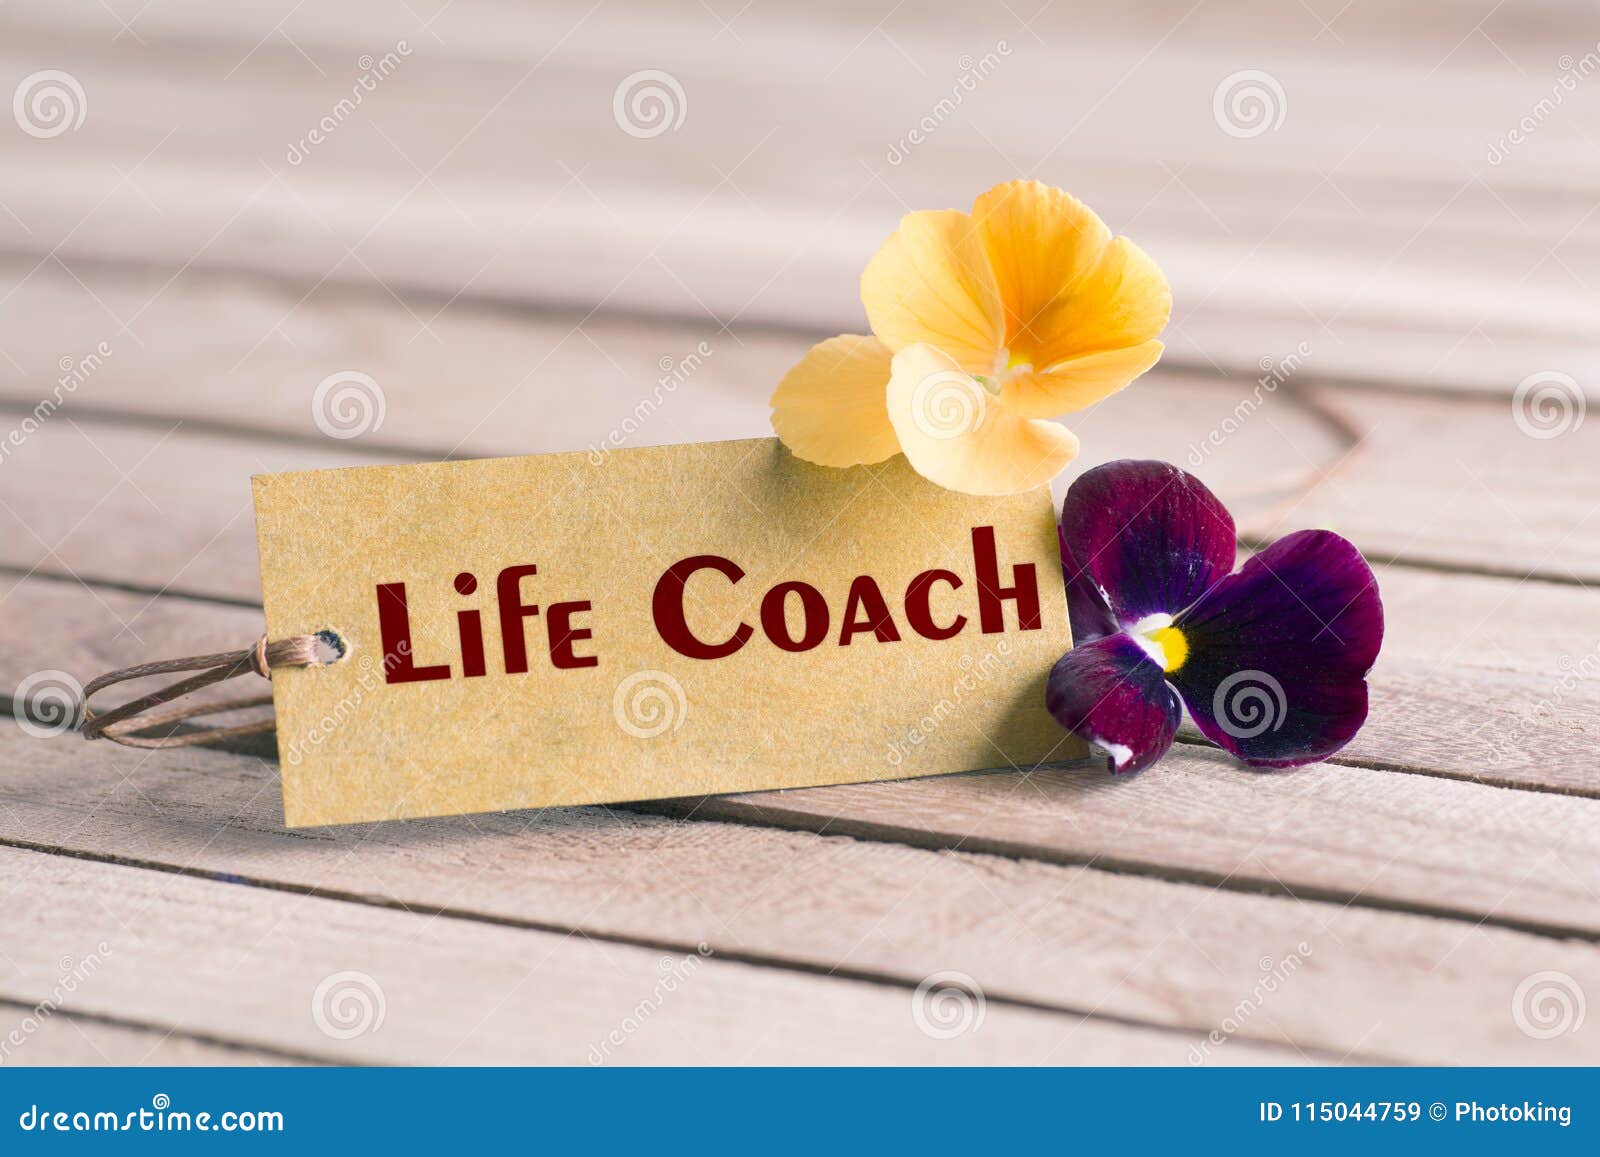 life coach tag